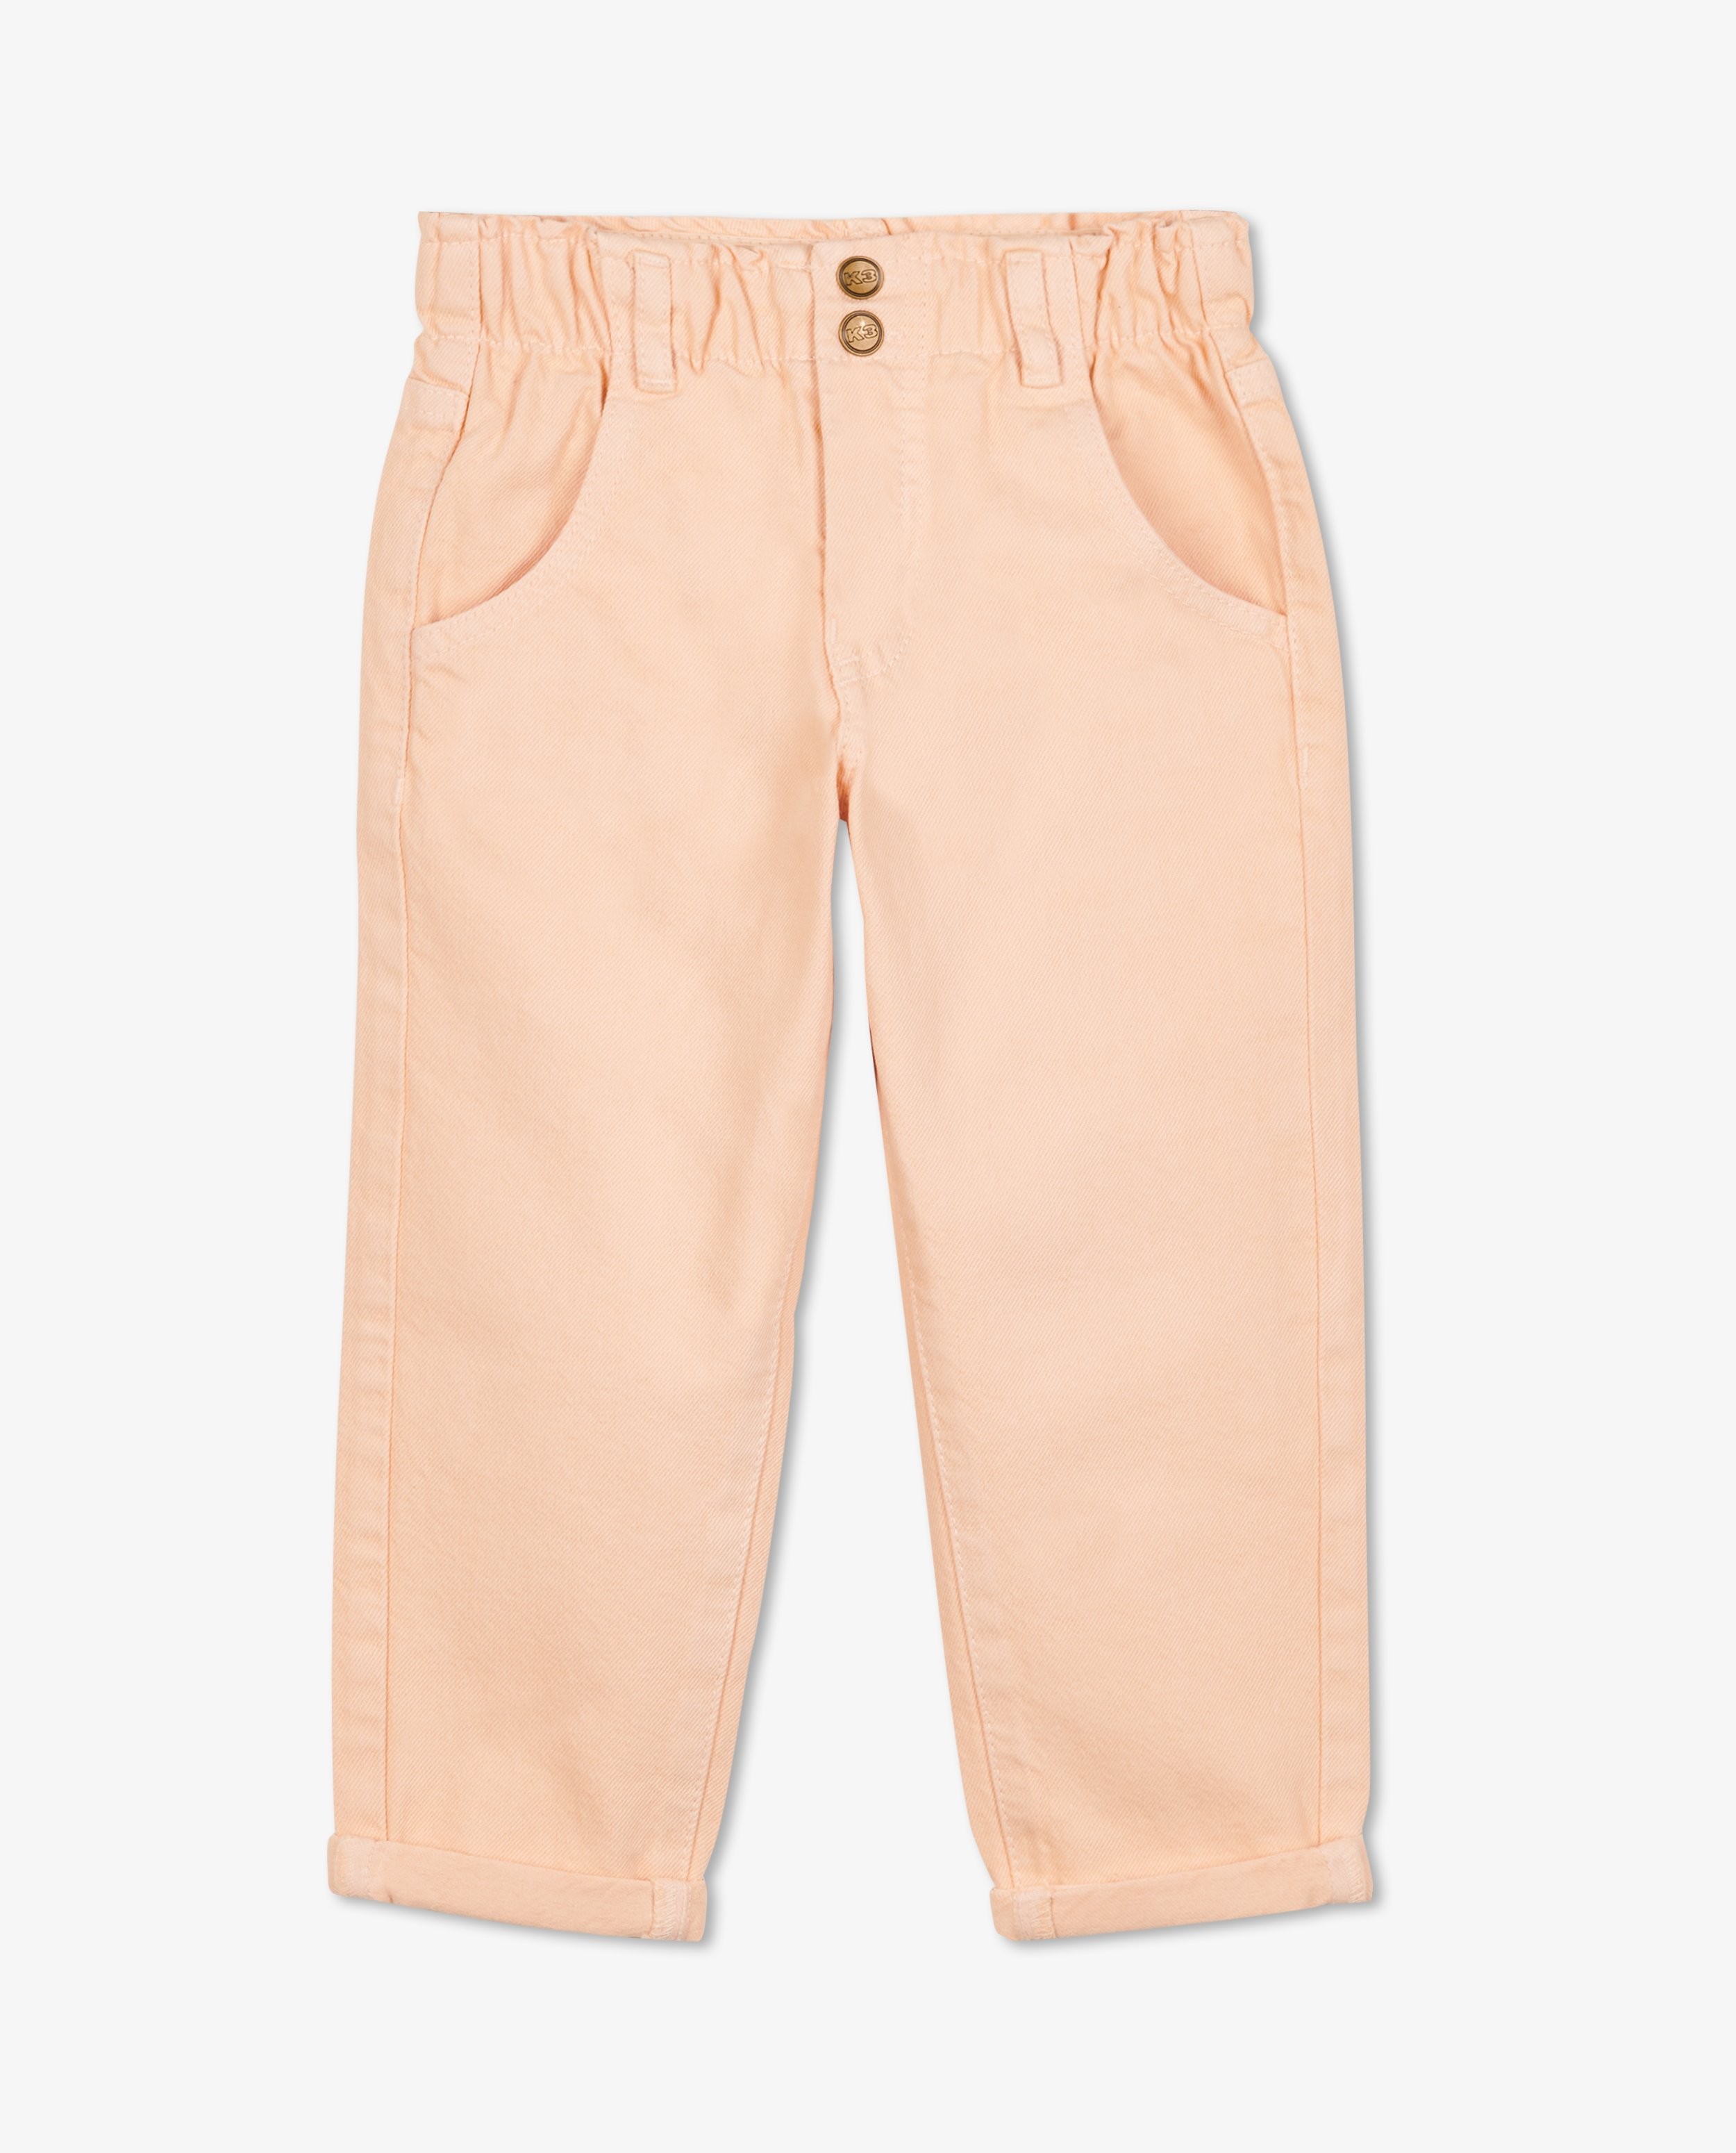 Pantalons - Jeans orange clair, coupe slouchy